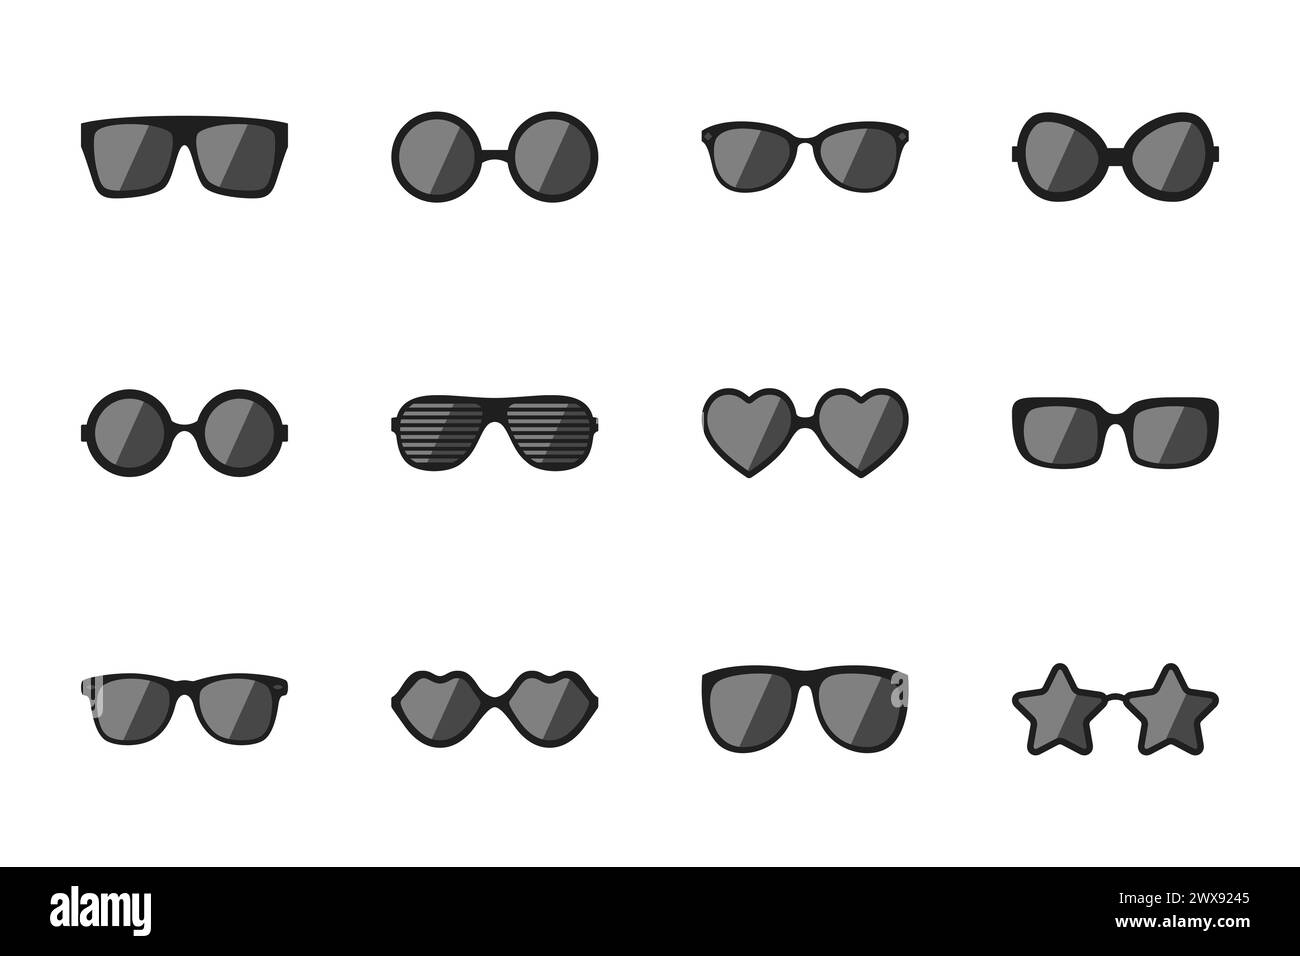 Vector Glasses Model Icons. Man, Women Frames, Different Shapes Sunglasses. Black Eyeglasses Isolated. Eyewear Silhouettes Stock Vector